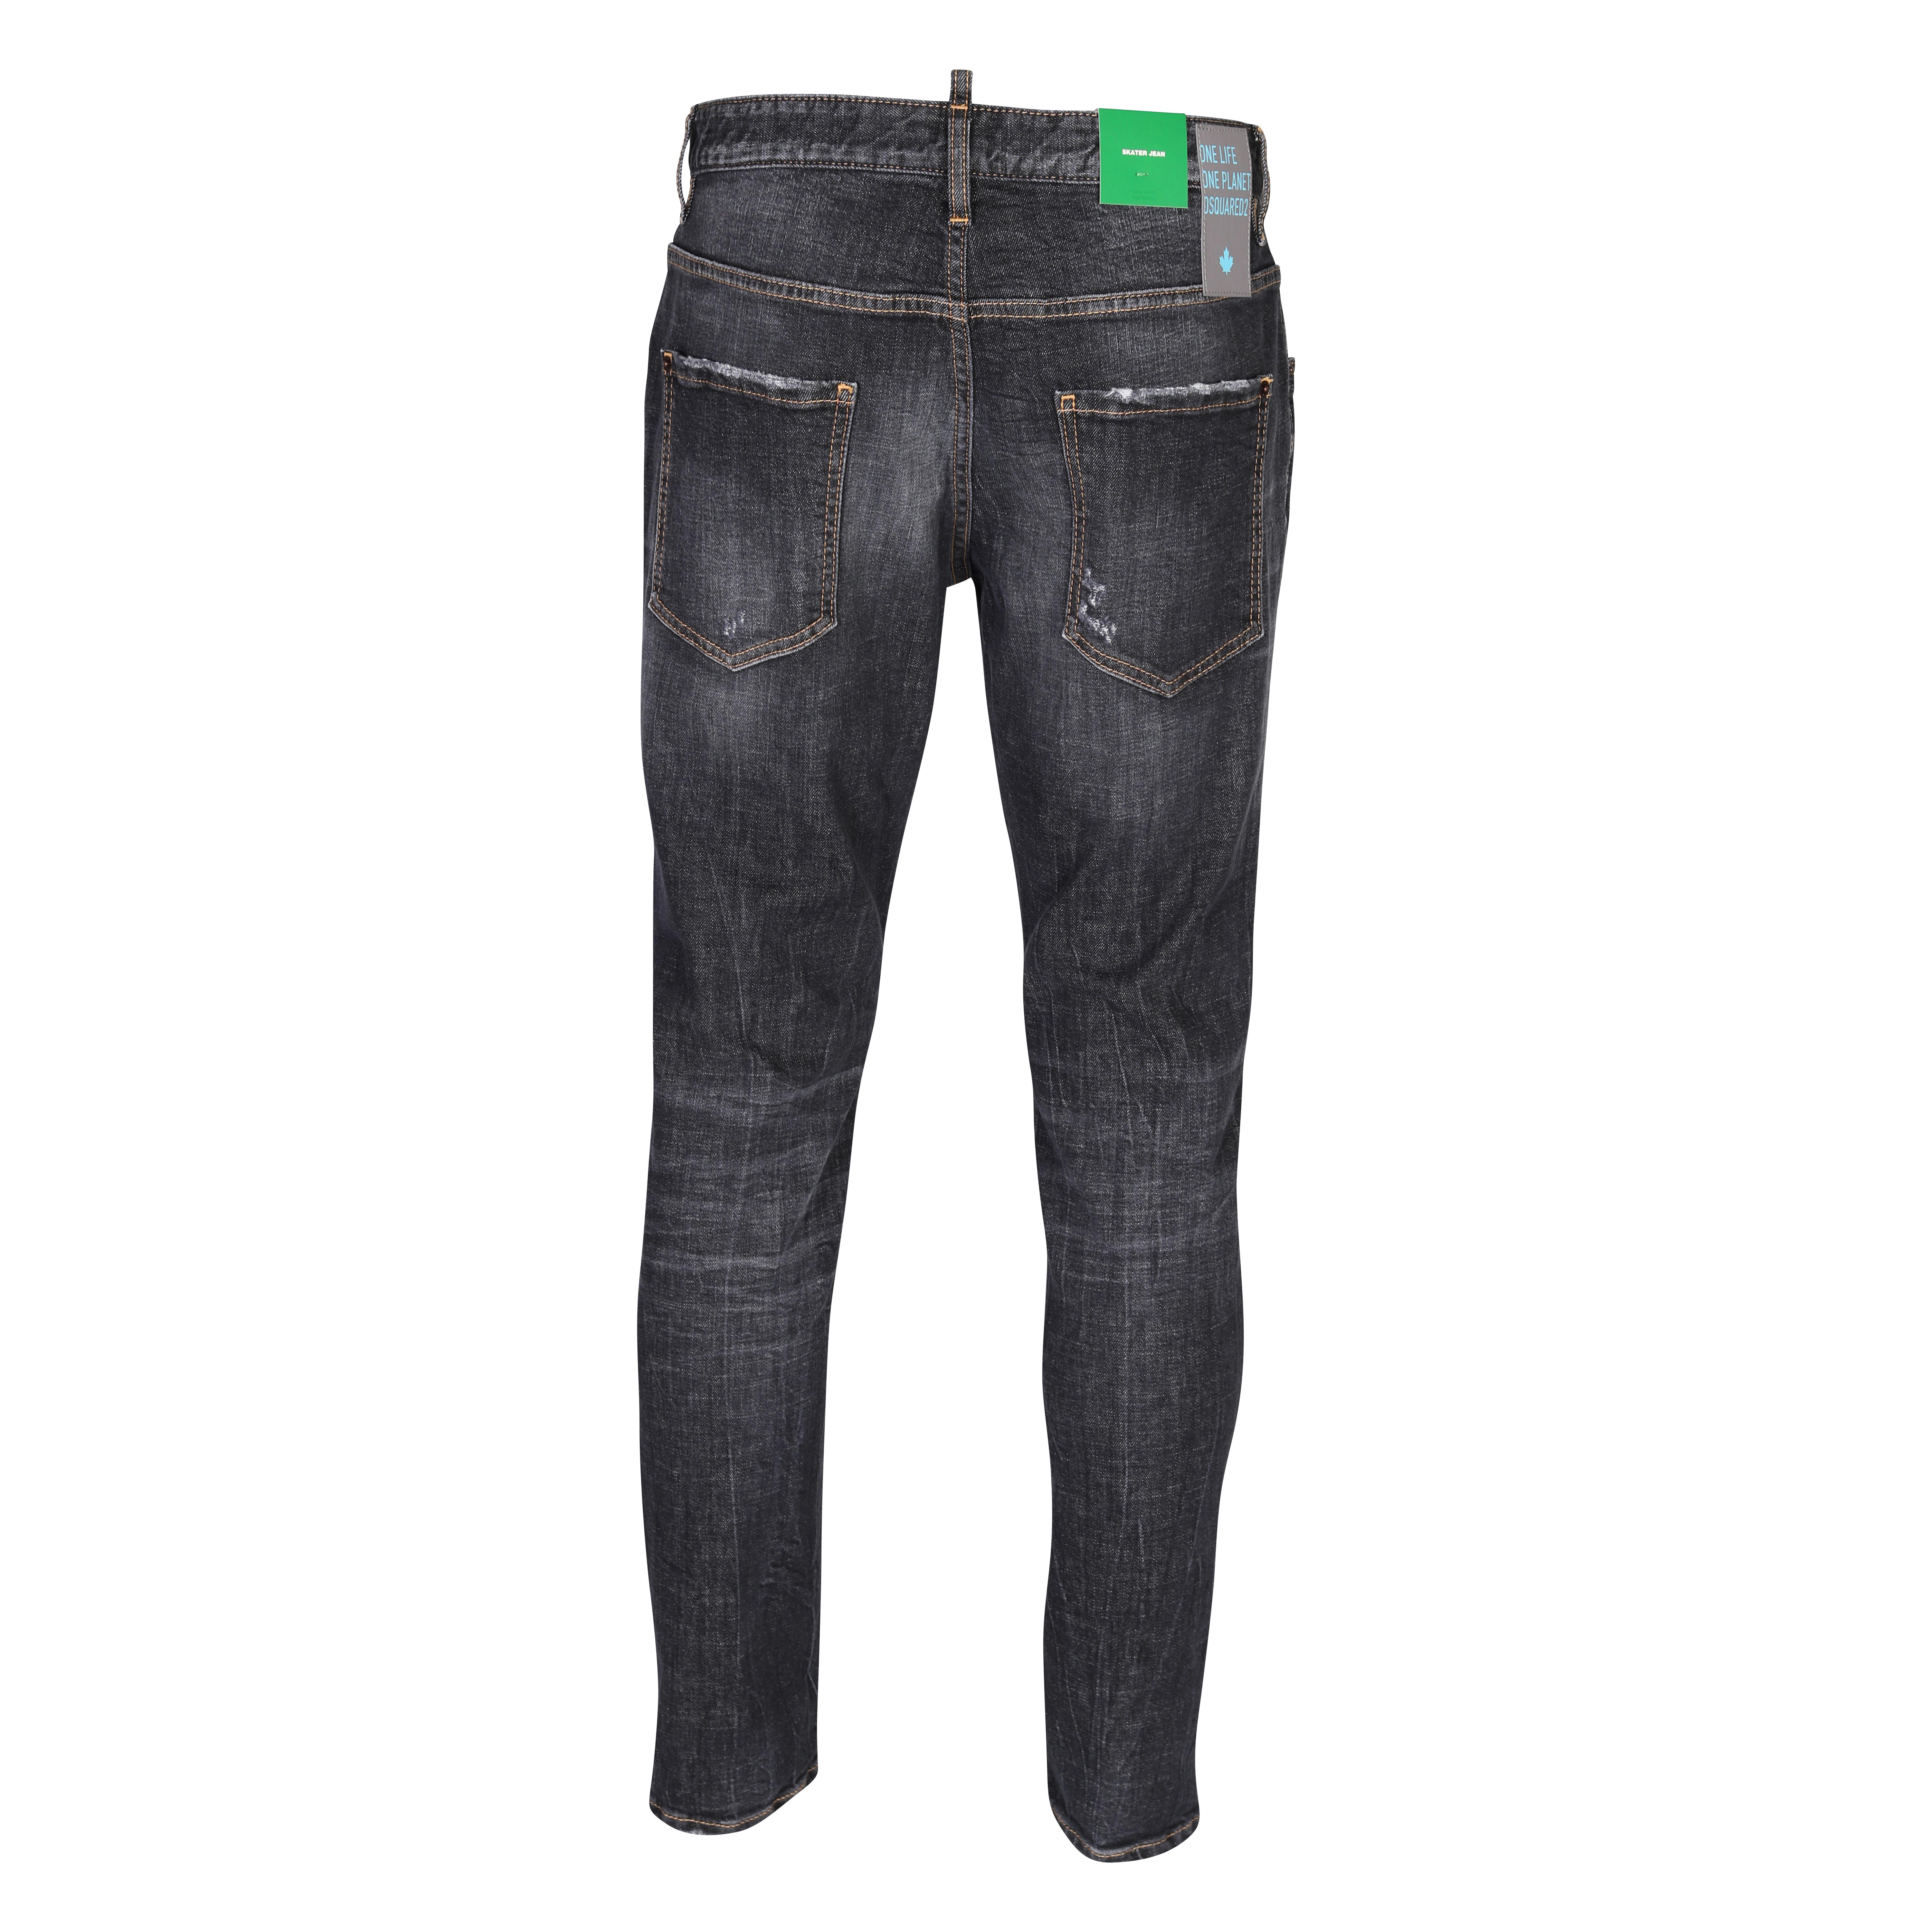 DSQUARED2 Green Label Skater Jeans in Washed Black 52